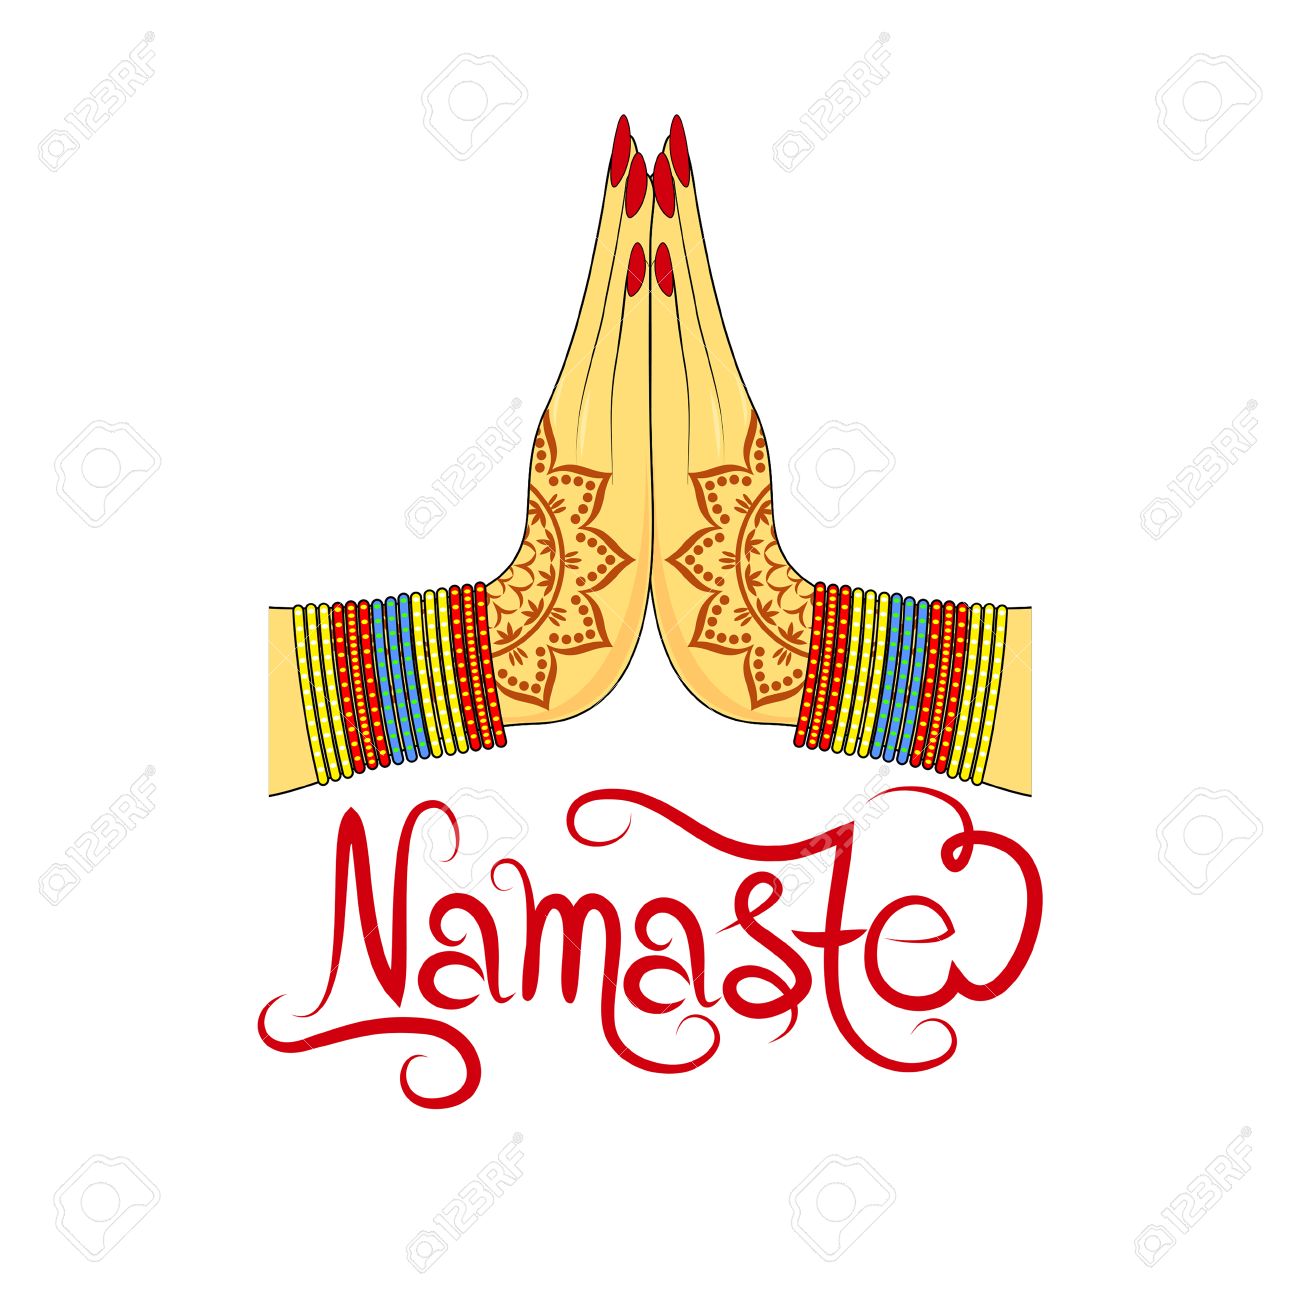 Namaste.jpg